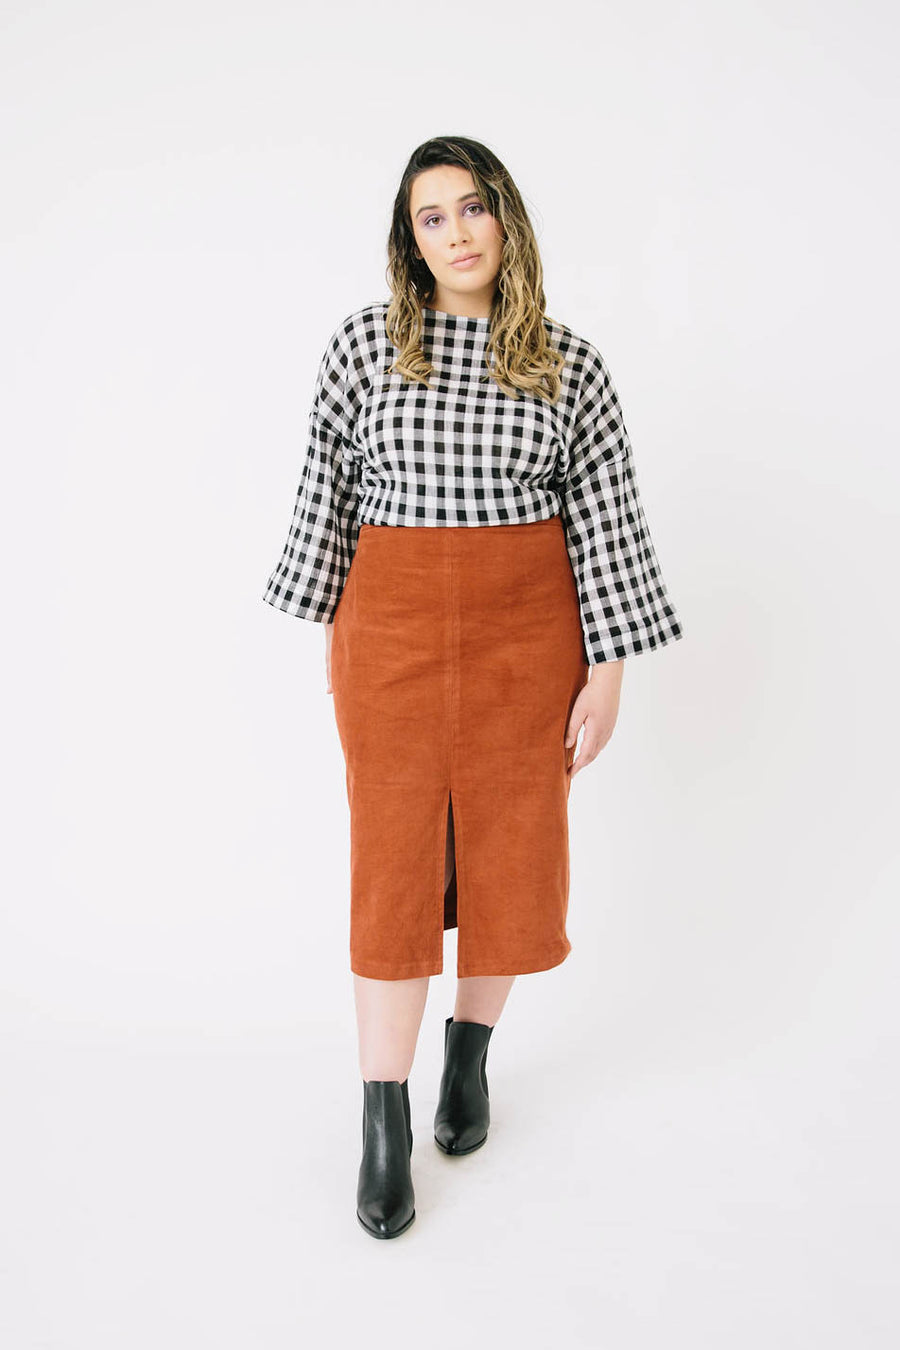 Axis Dress/Skirt pattern- Papercuts